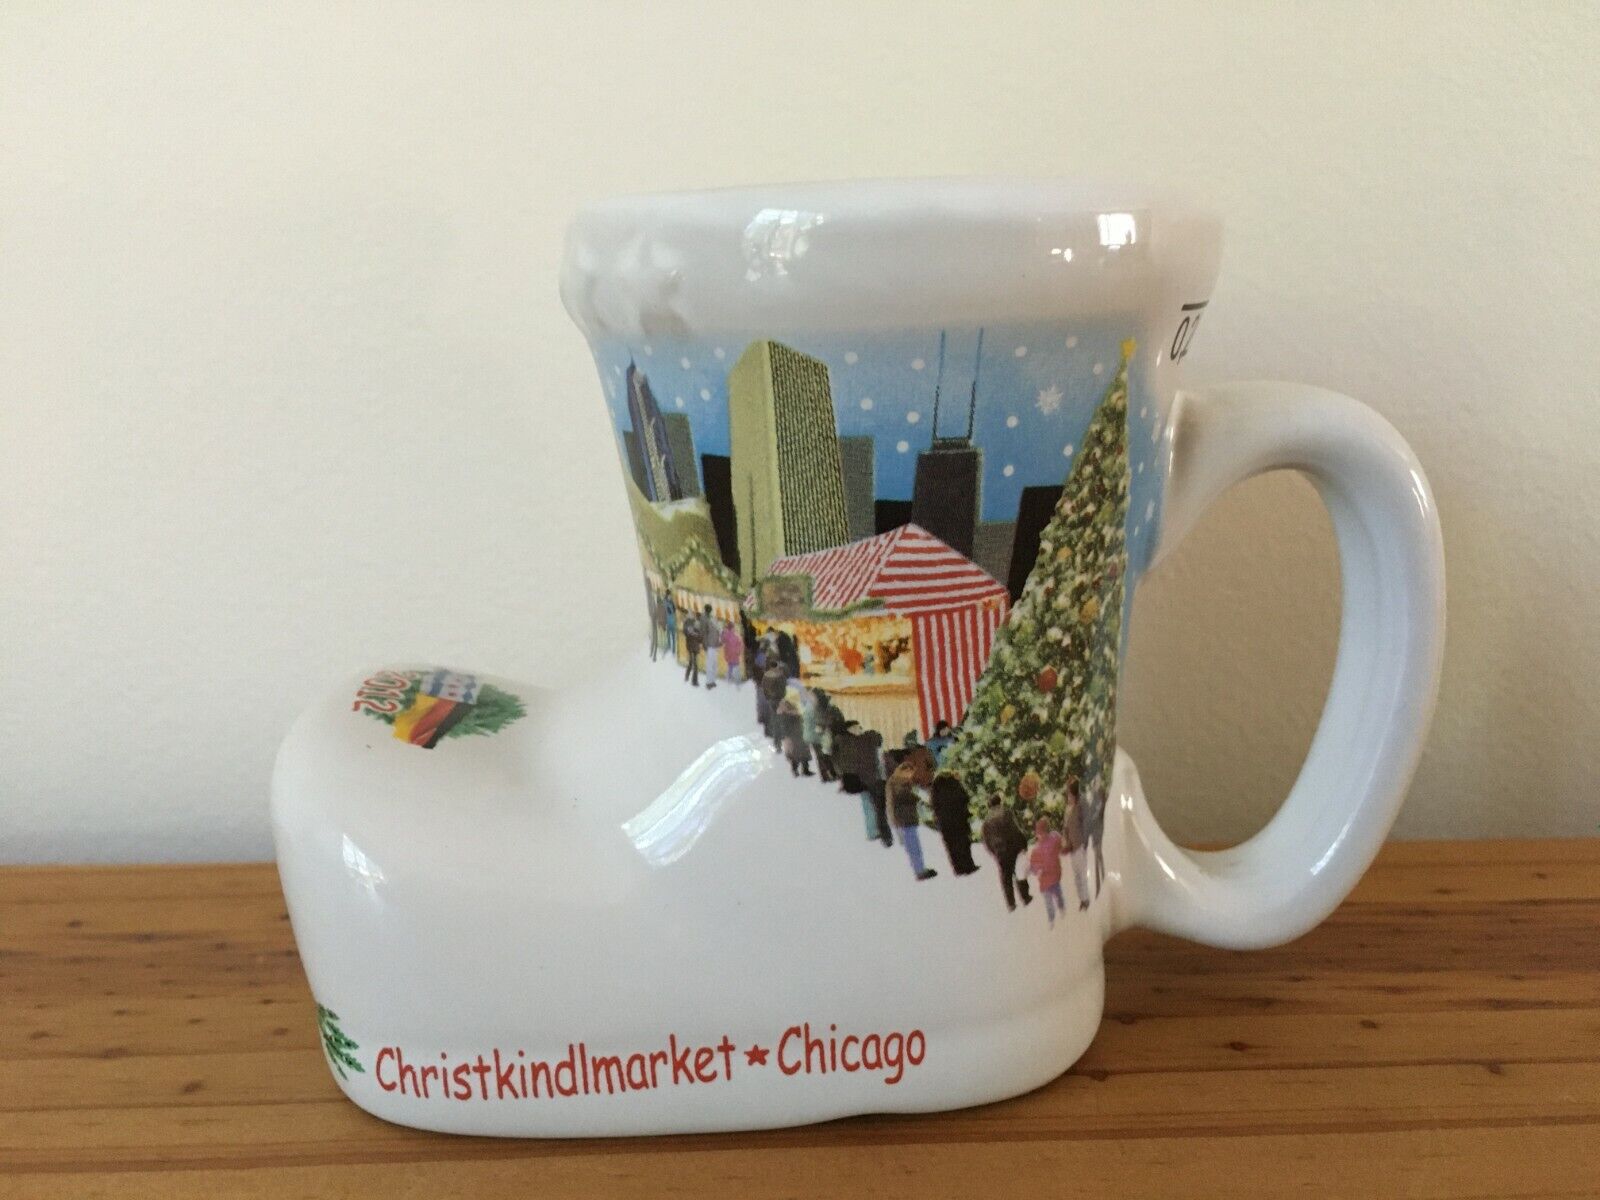 Chicago Christkindlmarket Souvenir Mug - SELECT THE YEAR YOU NEED (1996 - 2019)